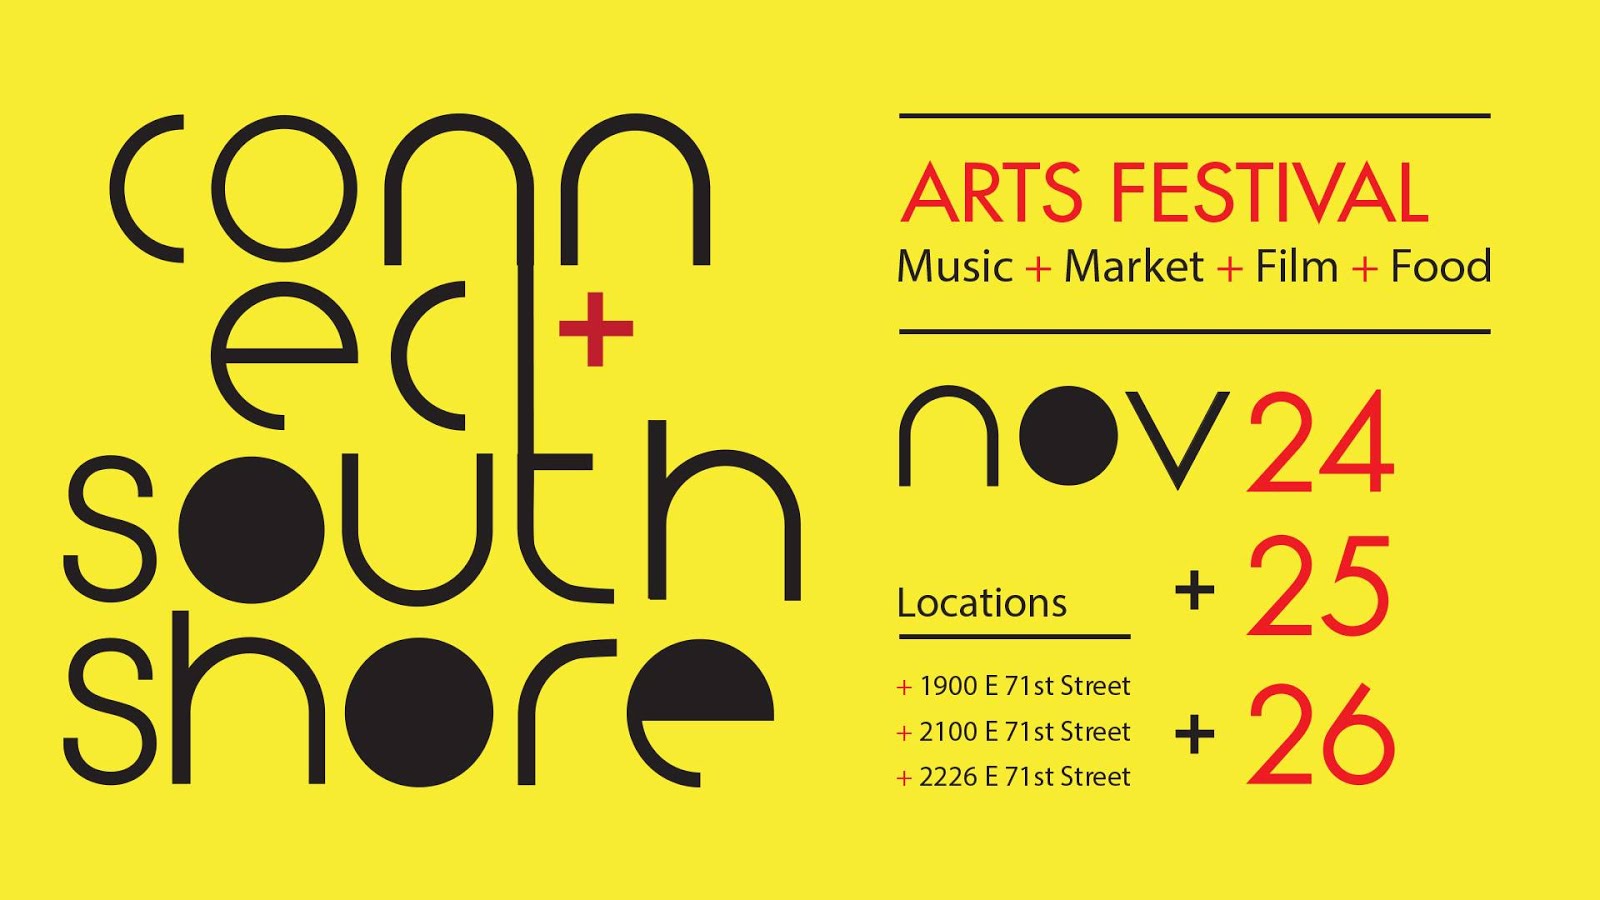 November 24, 25, 26: Connect South Shore Arts Festival